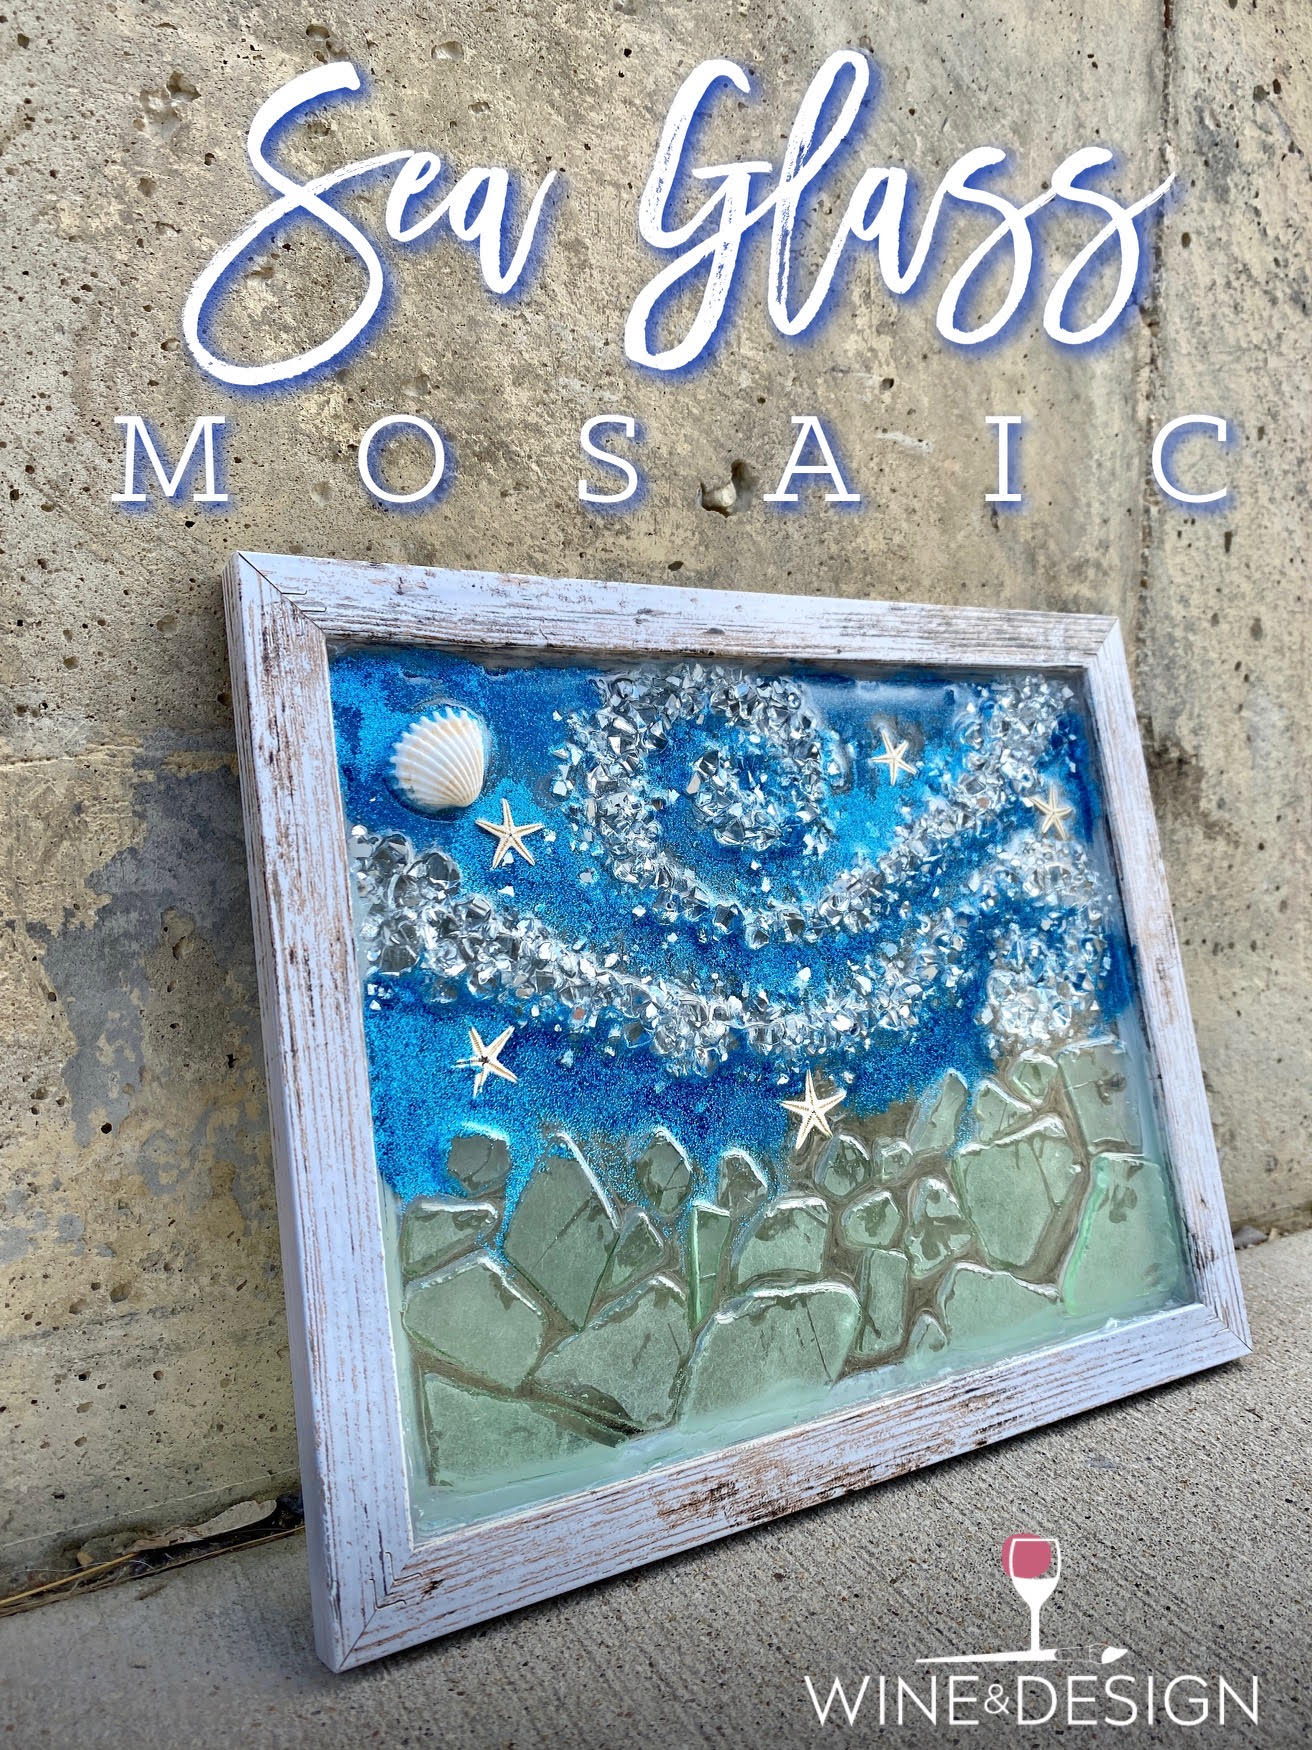 Resin Pour Sea Glass Mosaic